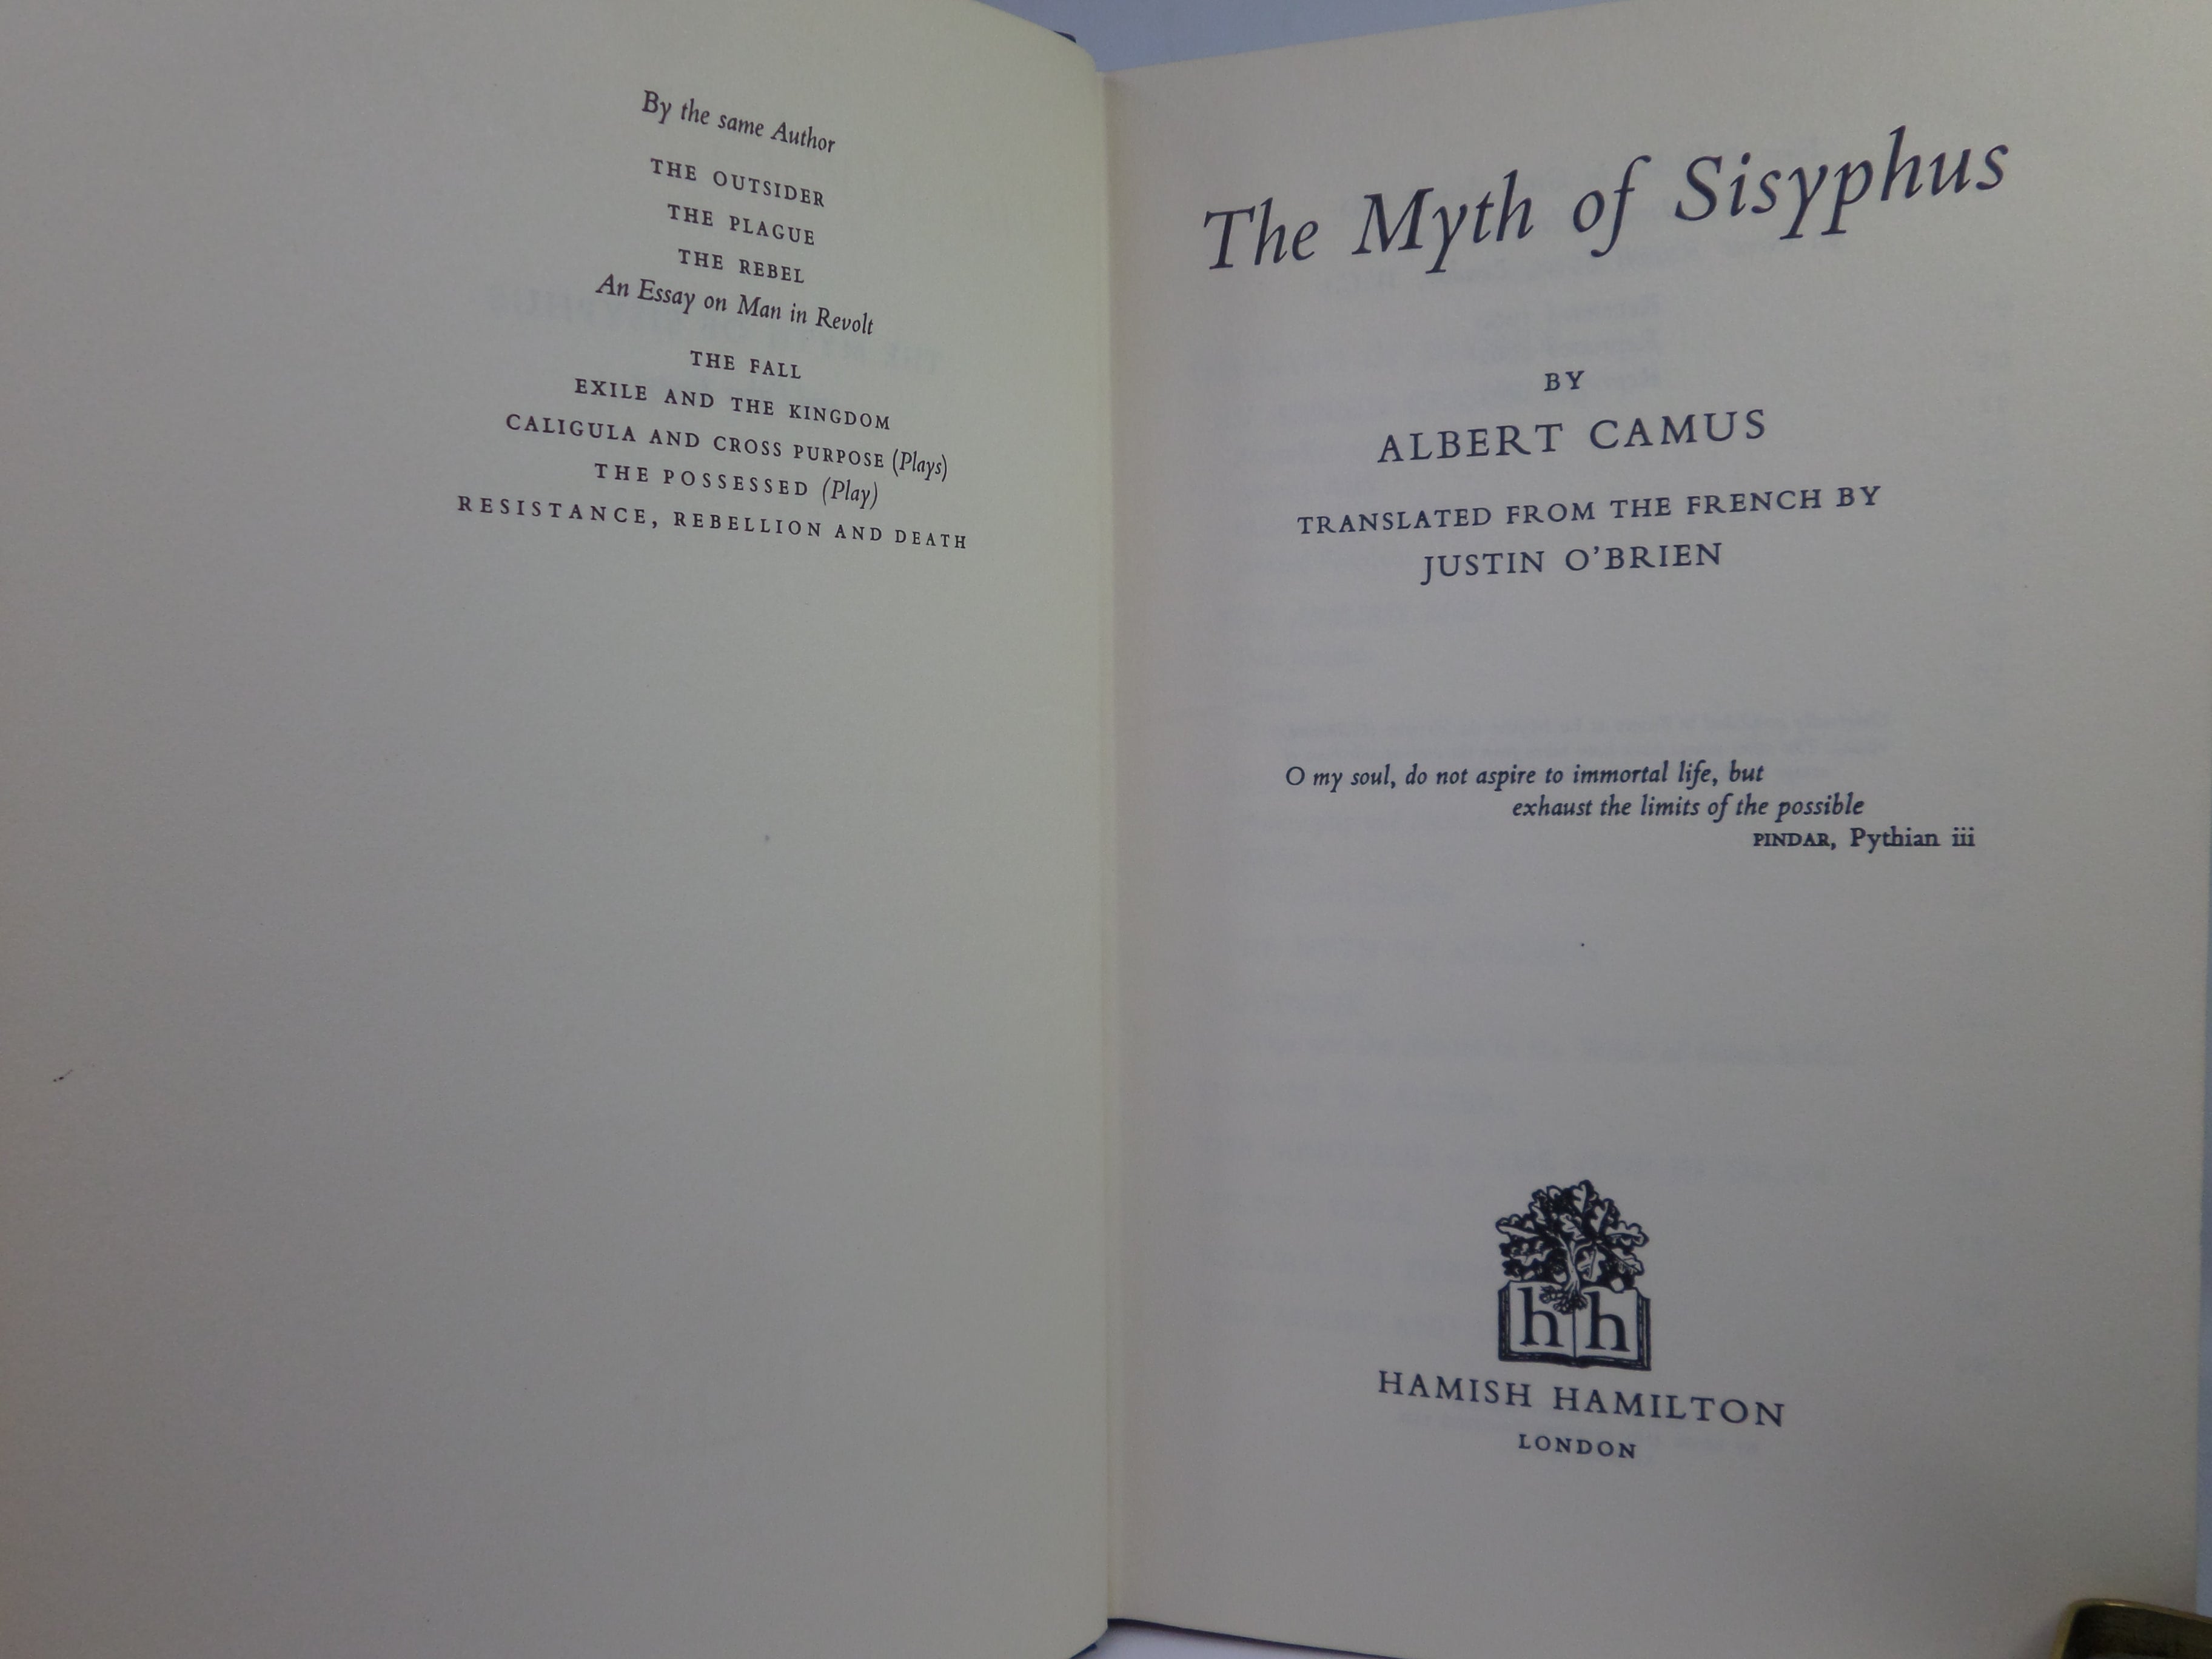 THE MYTH OF SISYPHUS BY ALBERT CAMUS 1965